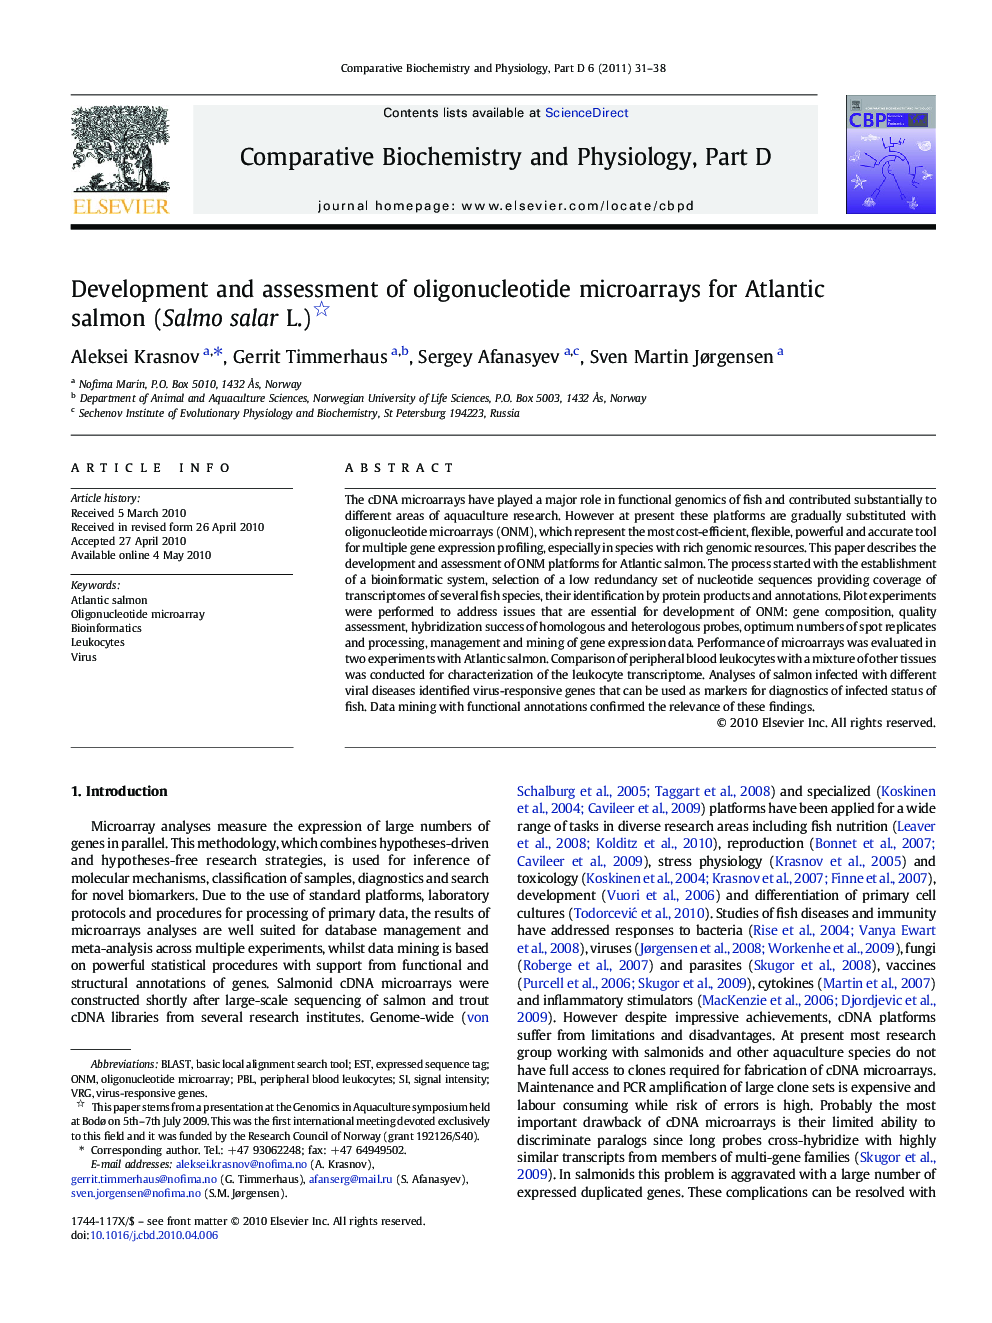 Development and assessment of oligonucleotide microarrays for Atlantic salmon (Salmo salar L.) 